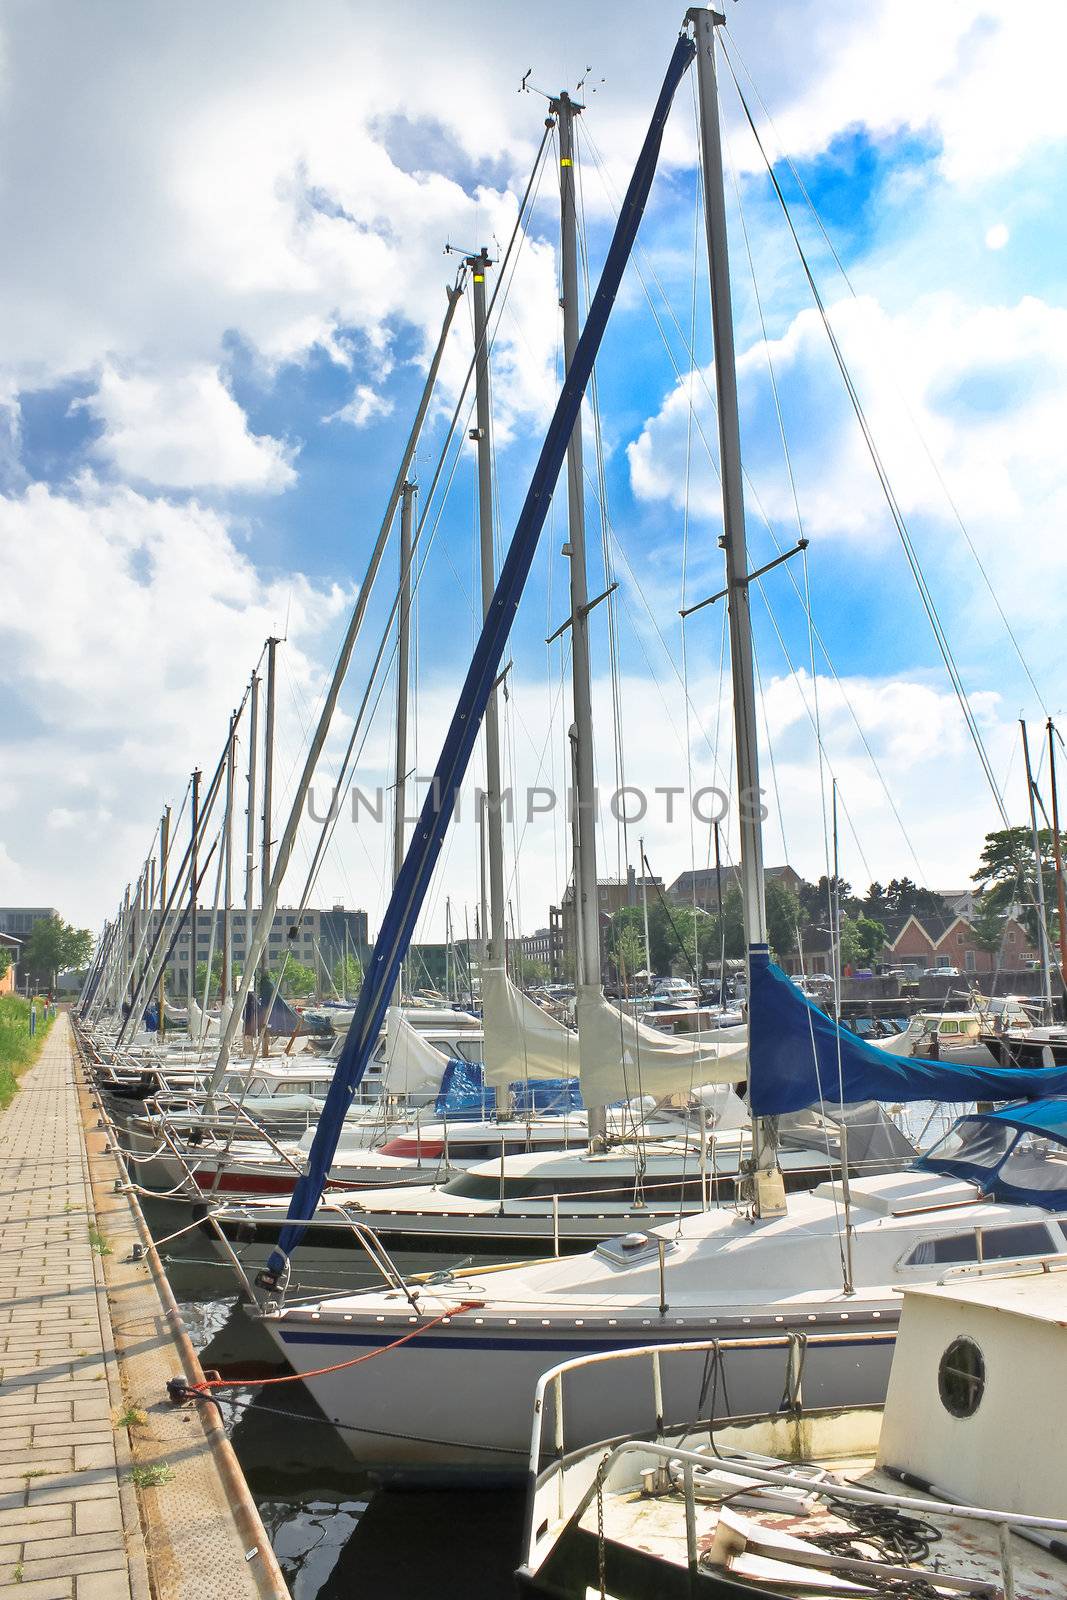 Boats at the marina Huizen. Netherlands  by NickNick